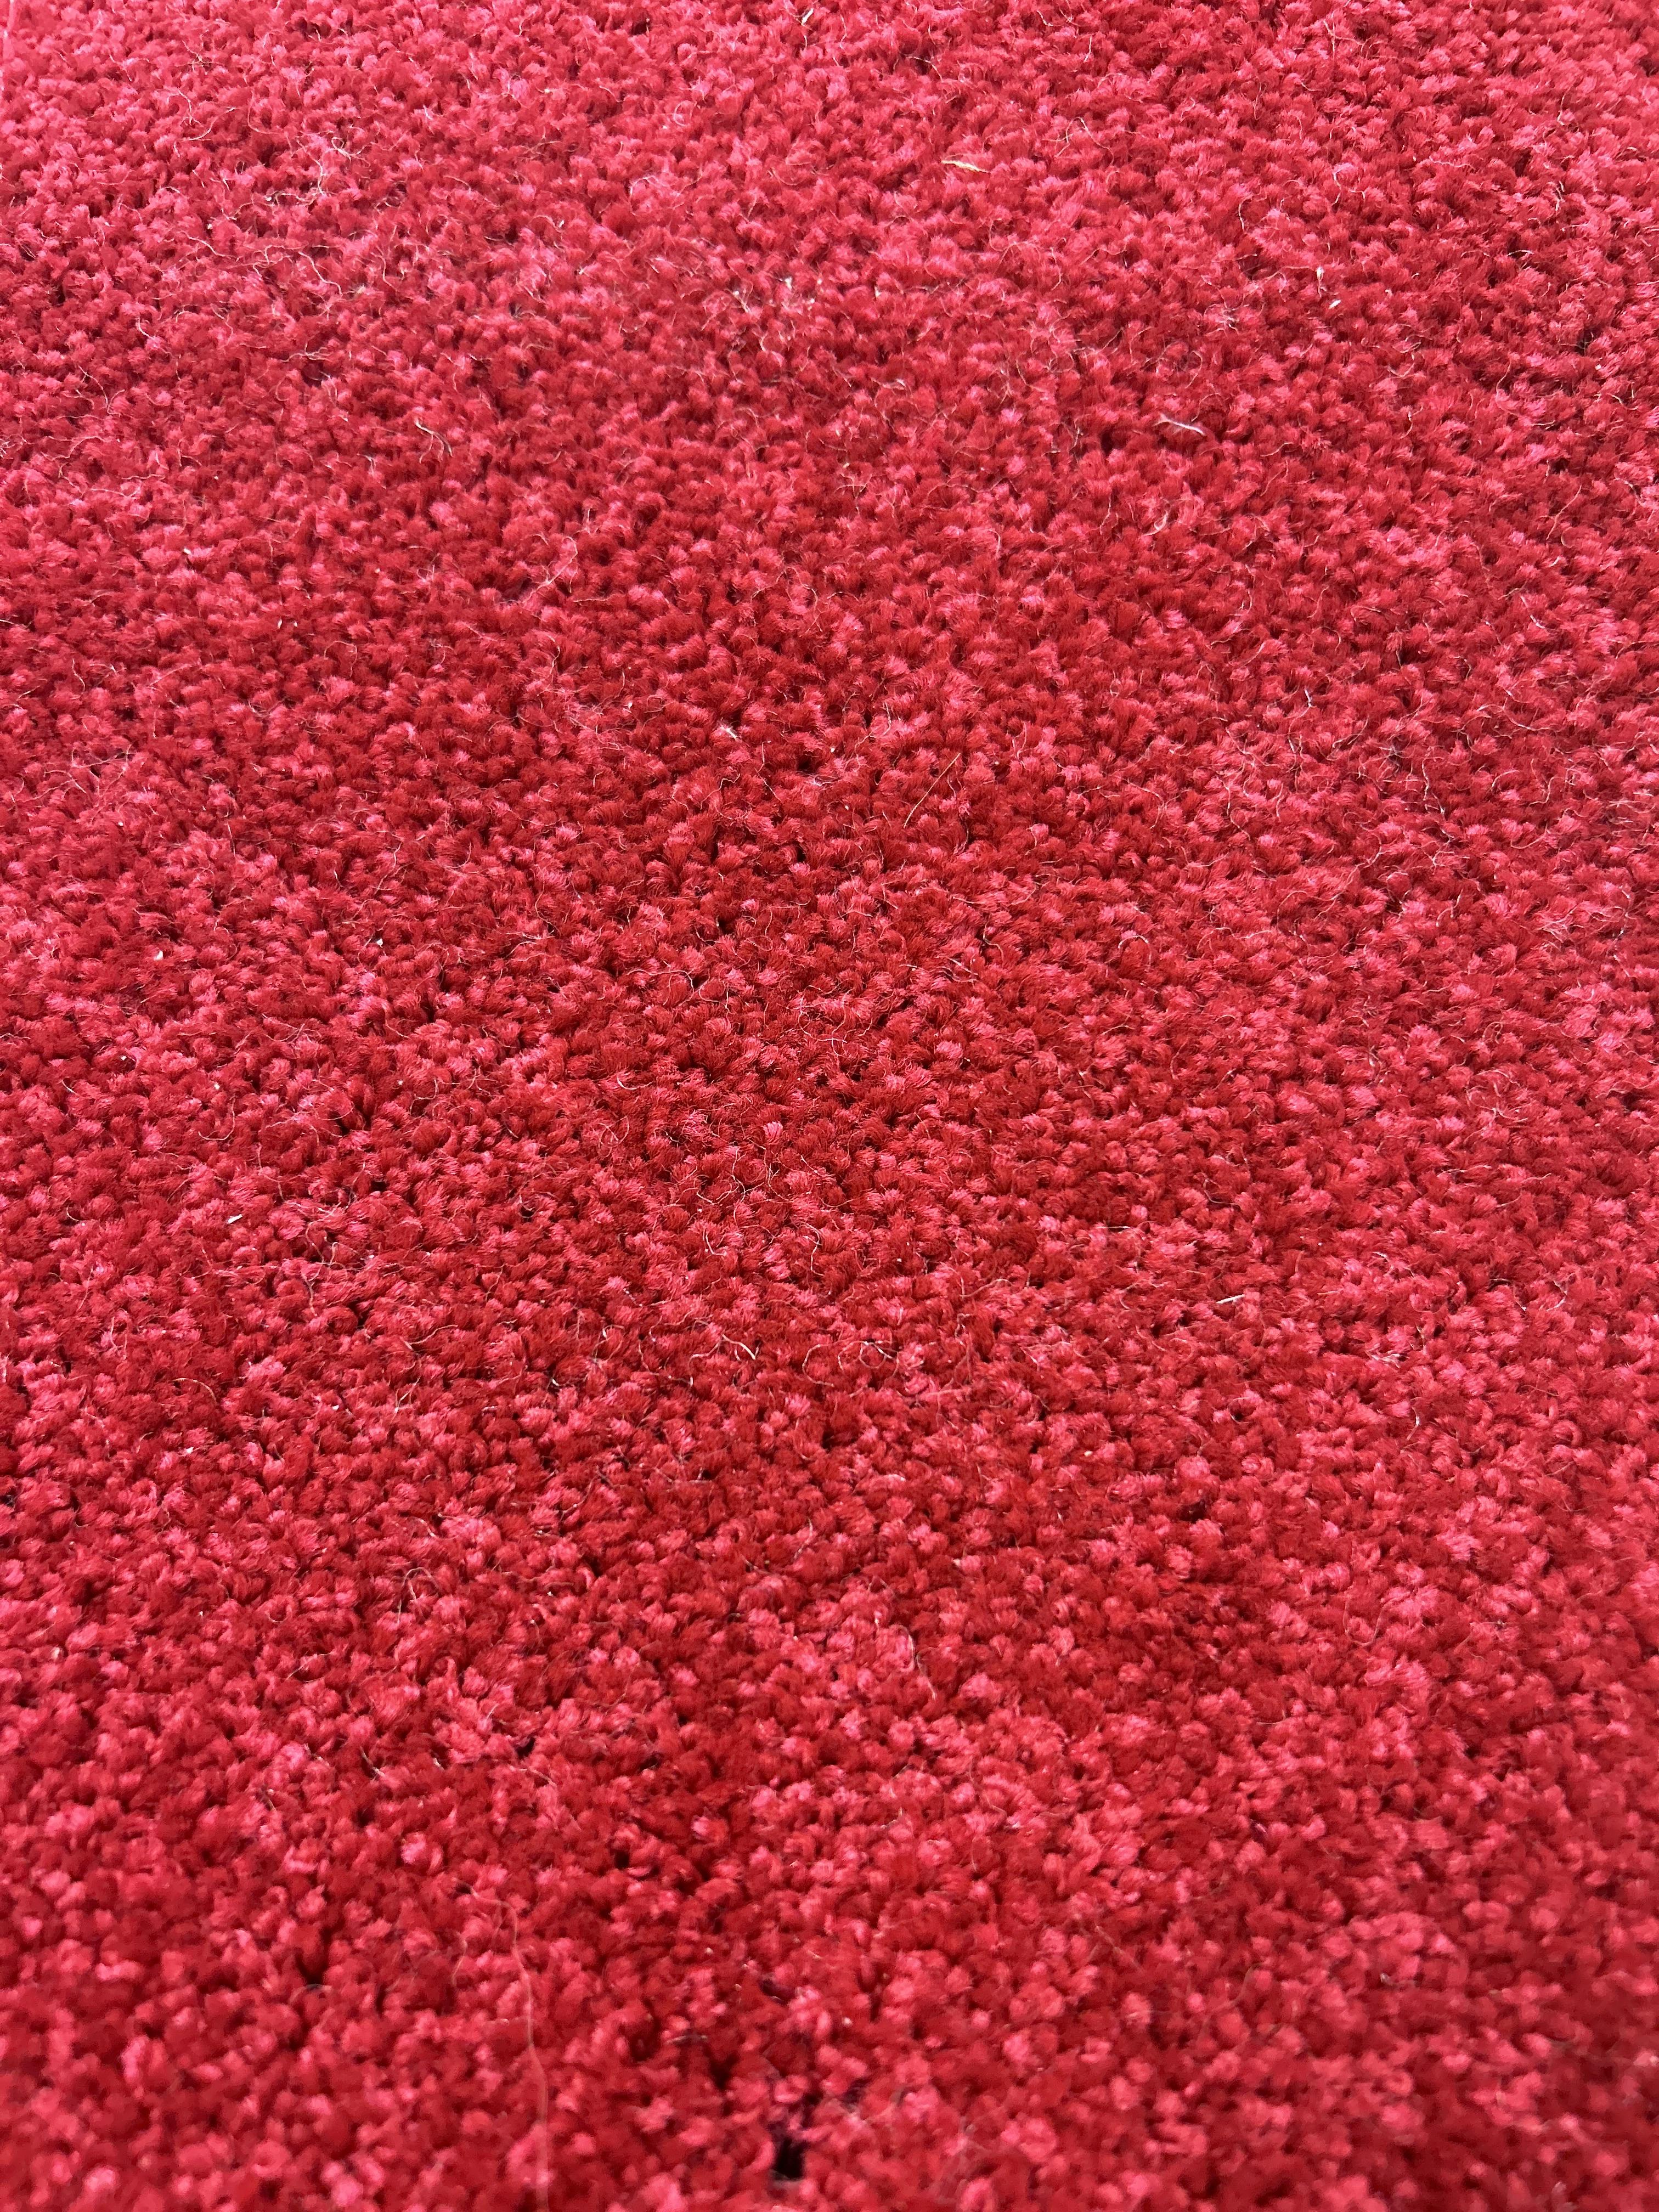 Pier twist carpet